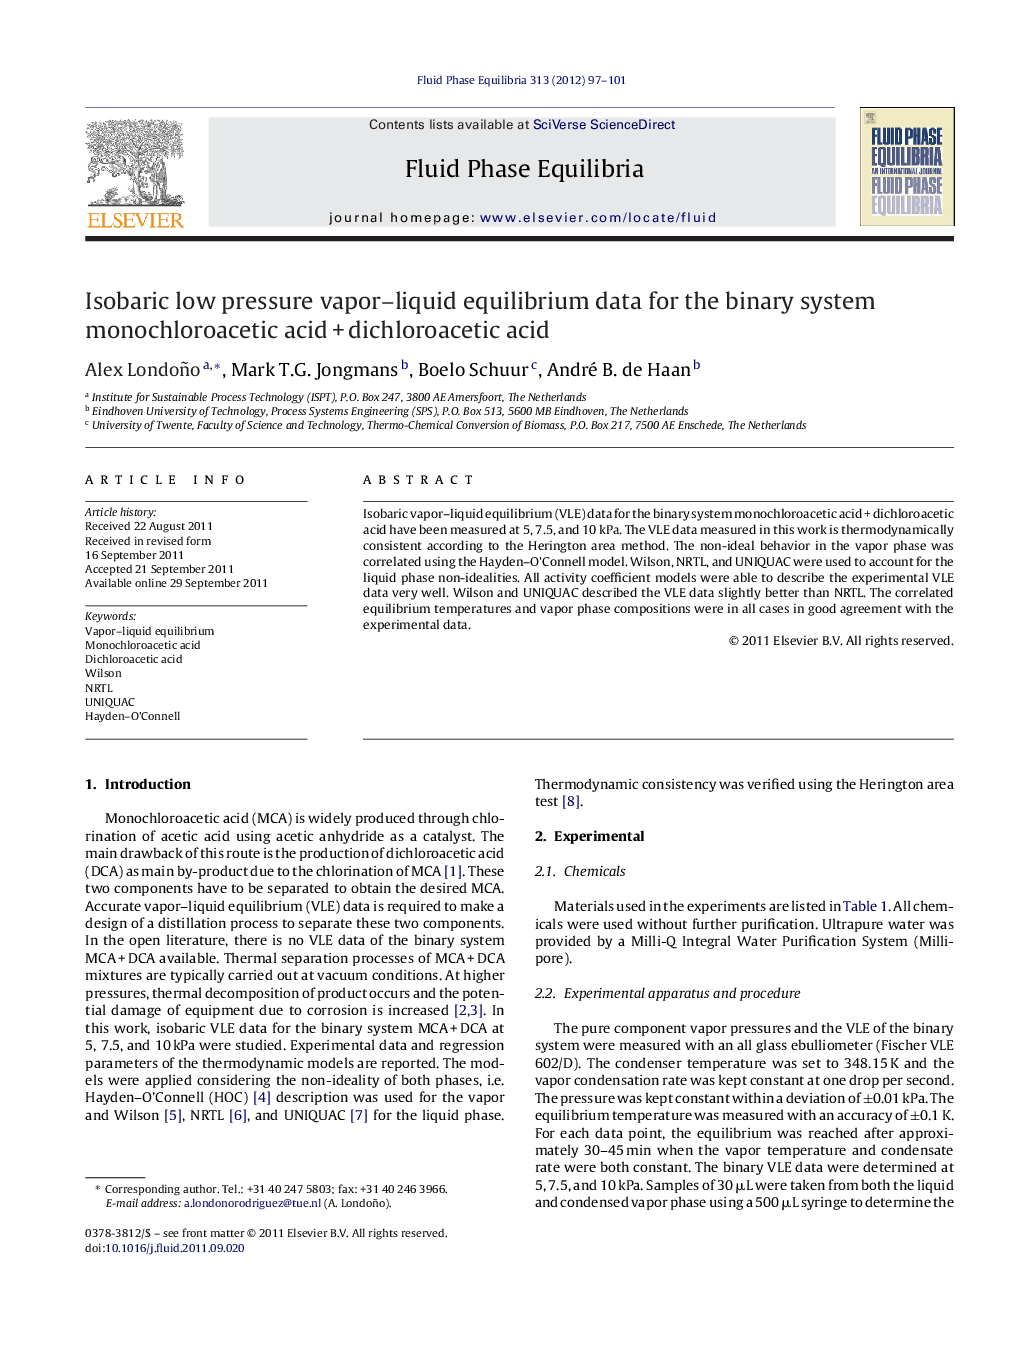 Isobaric low pressure vapor–liquid equilibrium data for the binary system monochloroacetic acid + dichloroacetic acid